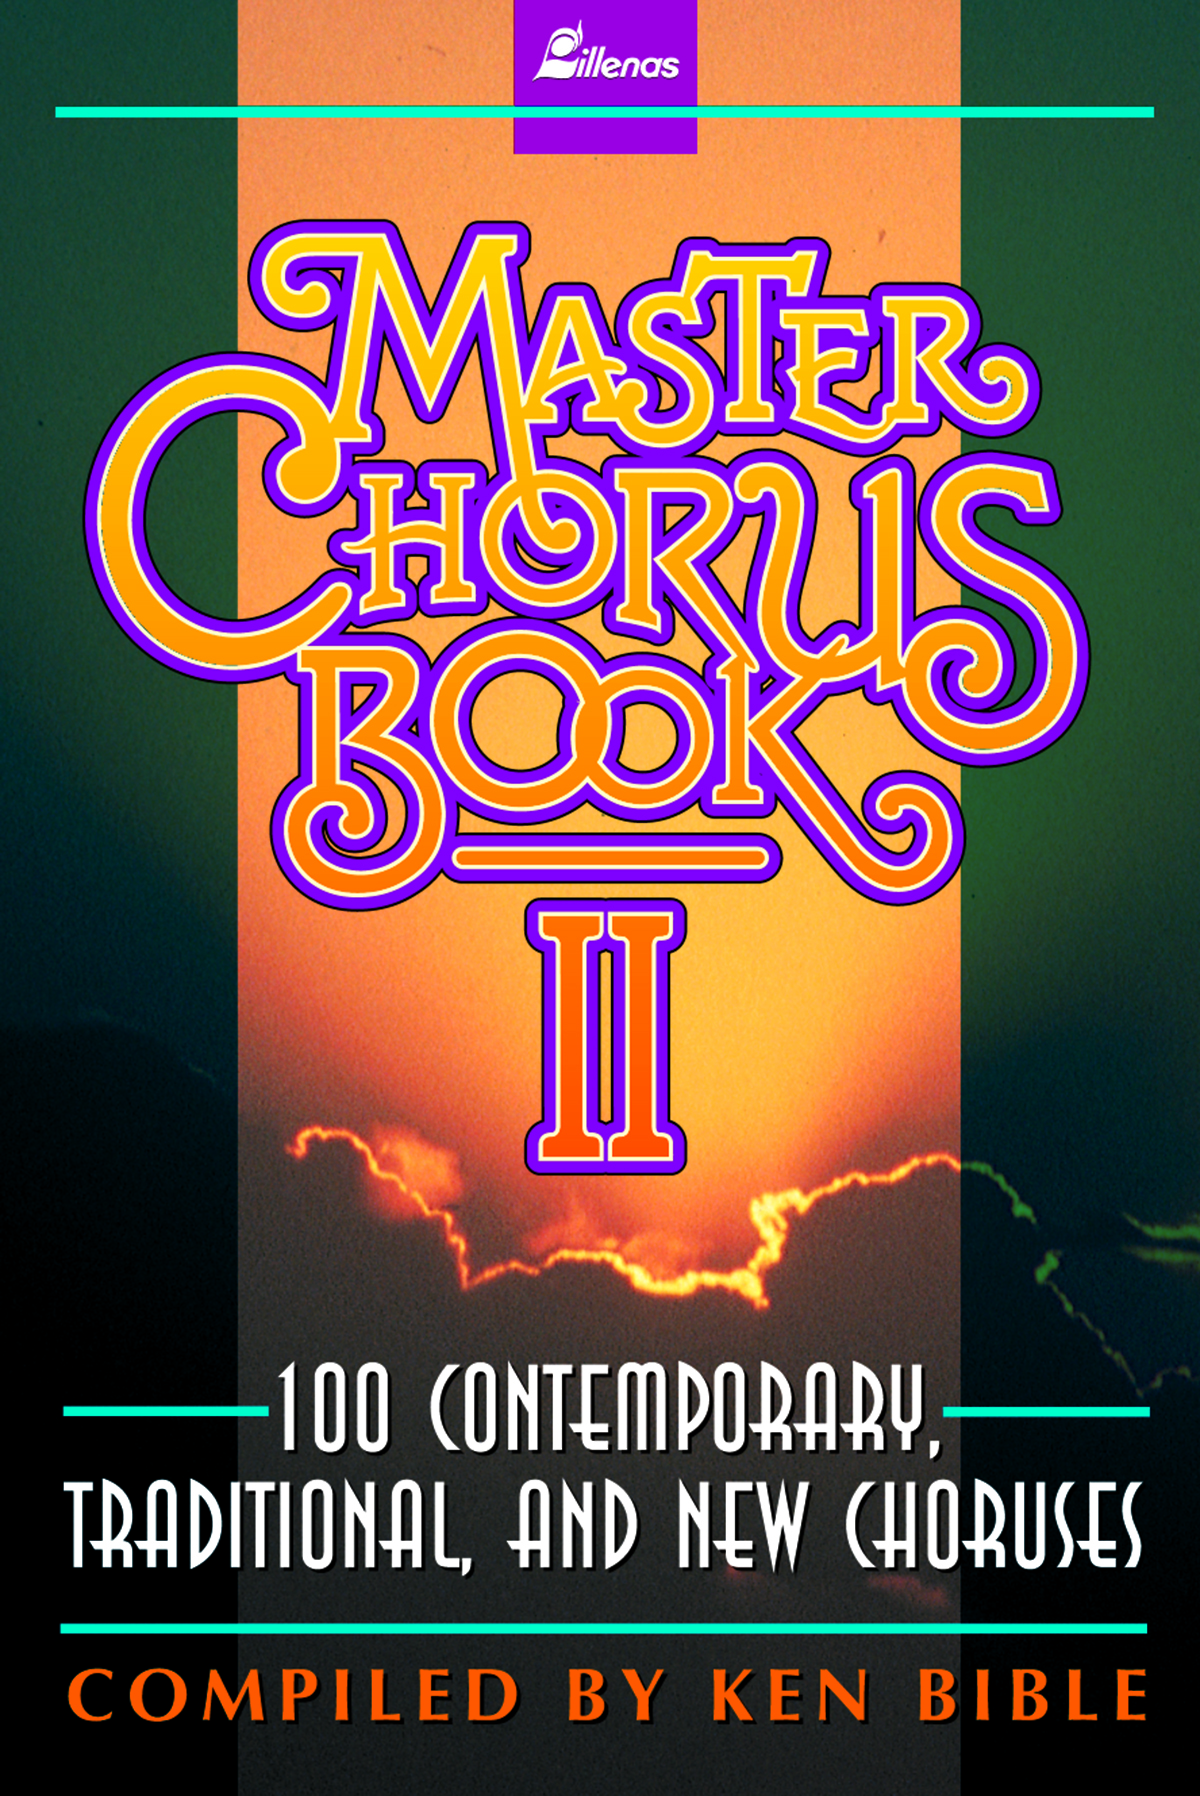 Master Chorus Book II